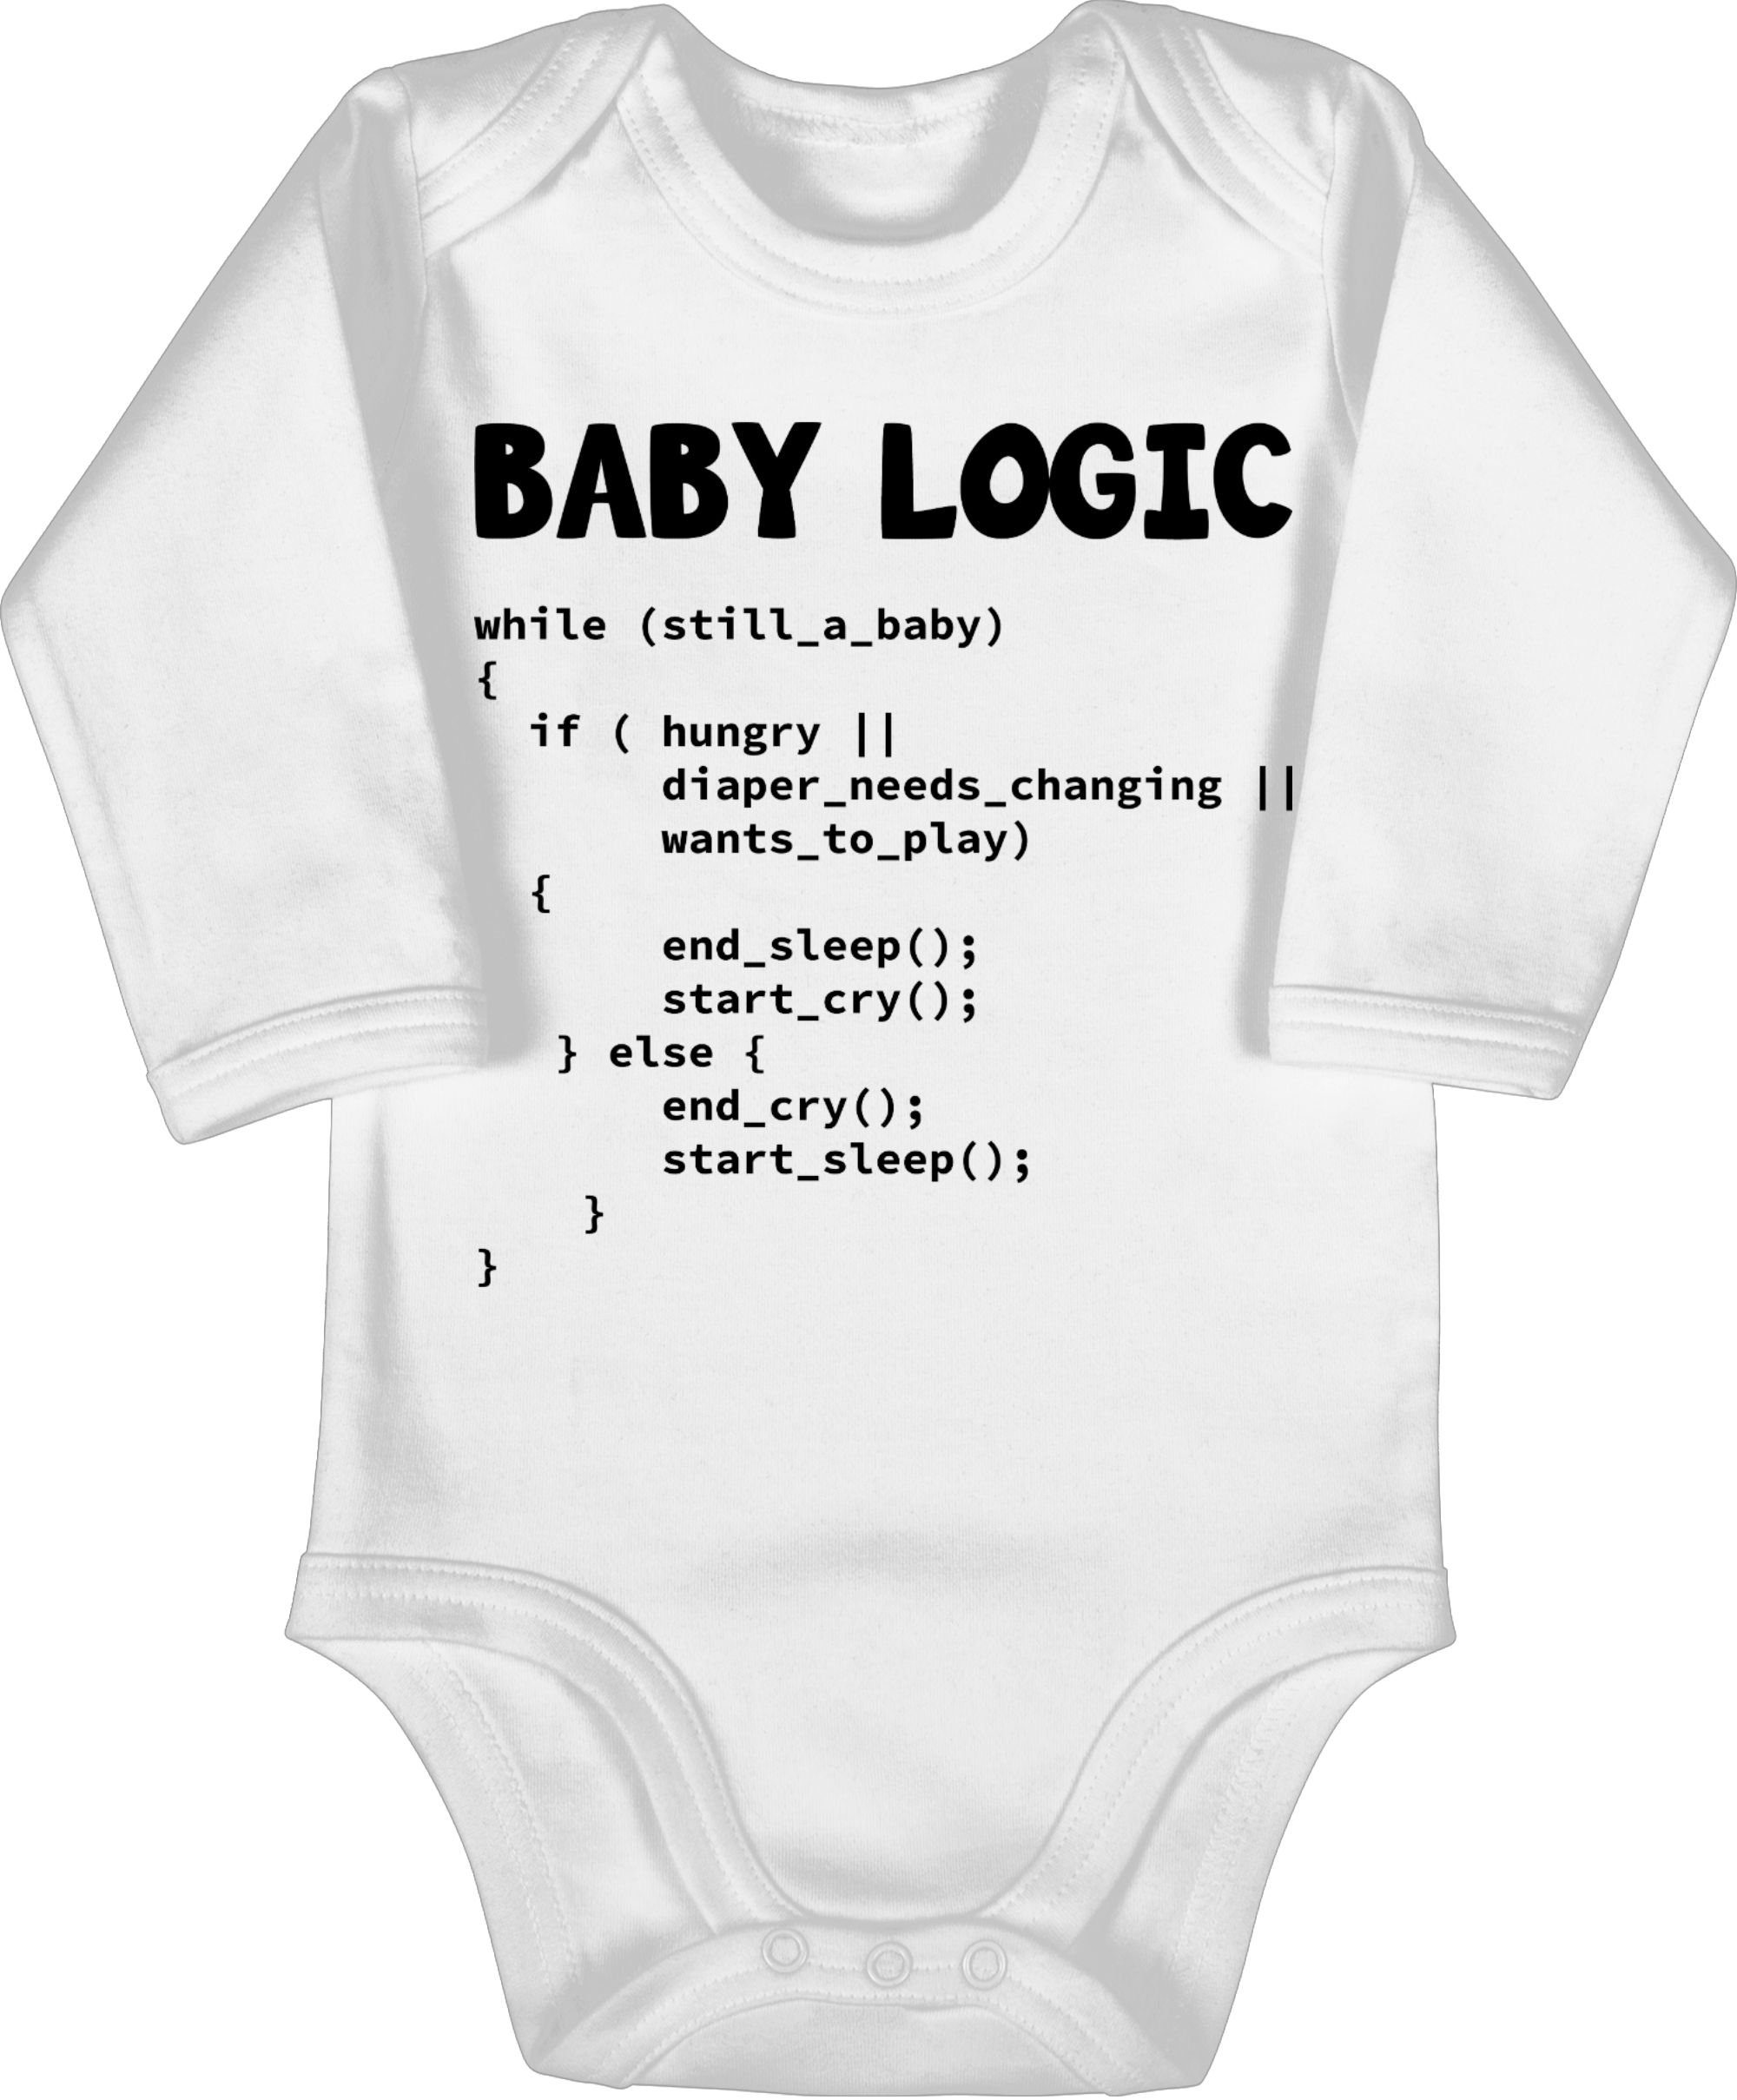 Shirtracer Shirtbody Nerdy Baby Logic Aktuelle Trends Baby 1 Weiß